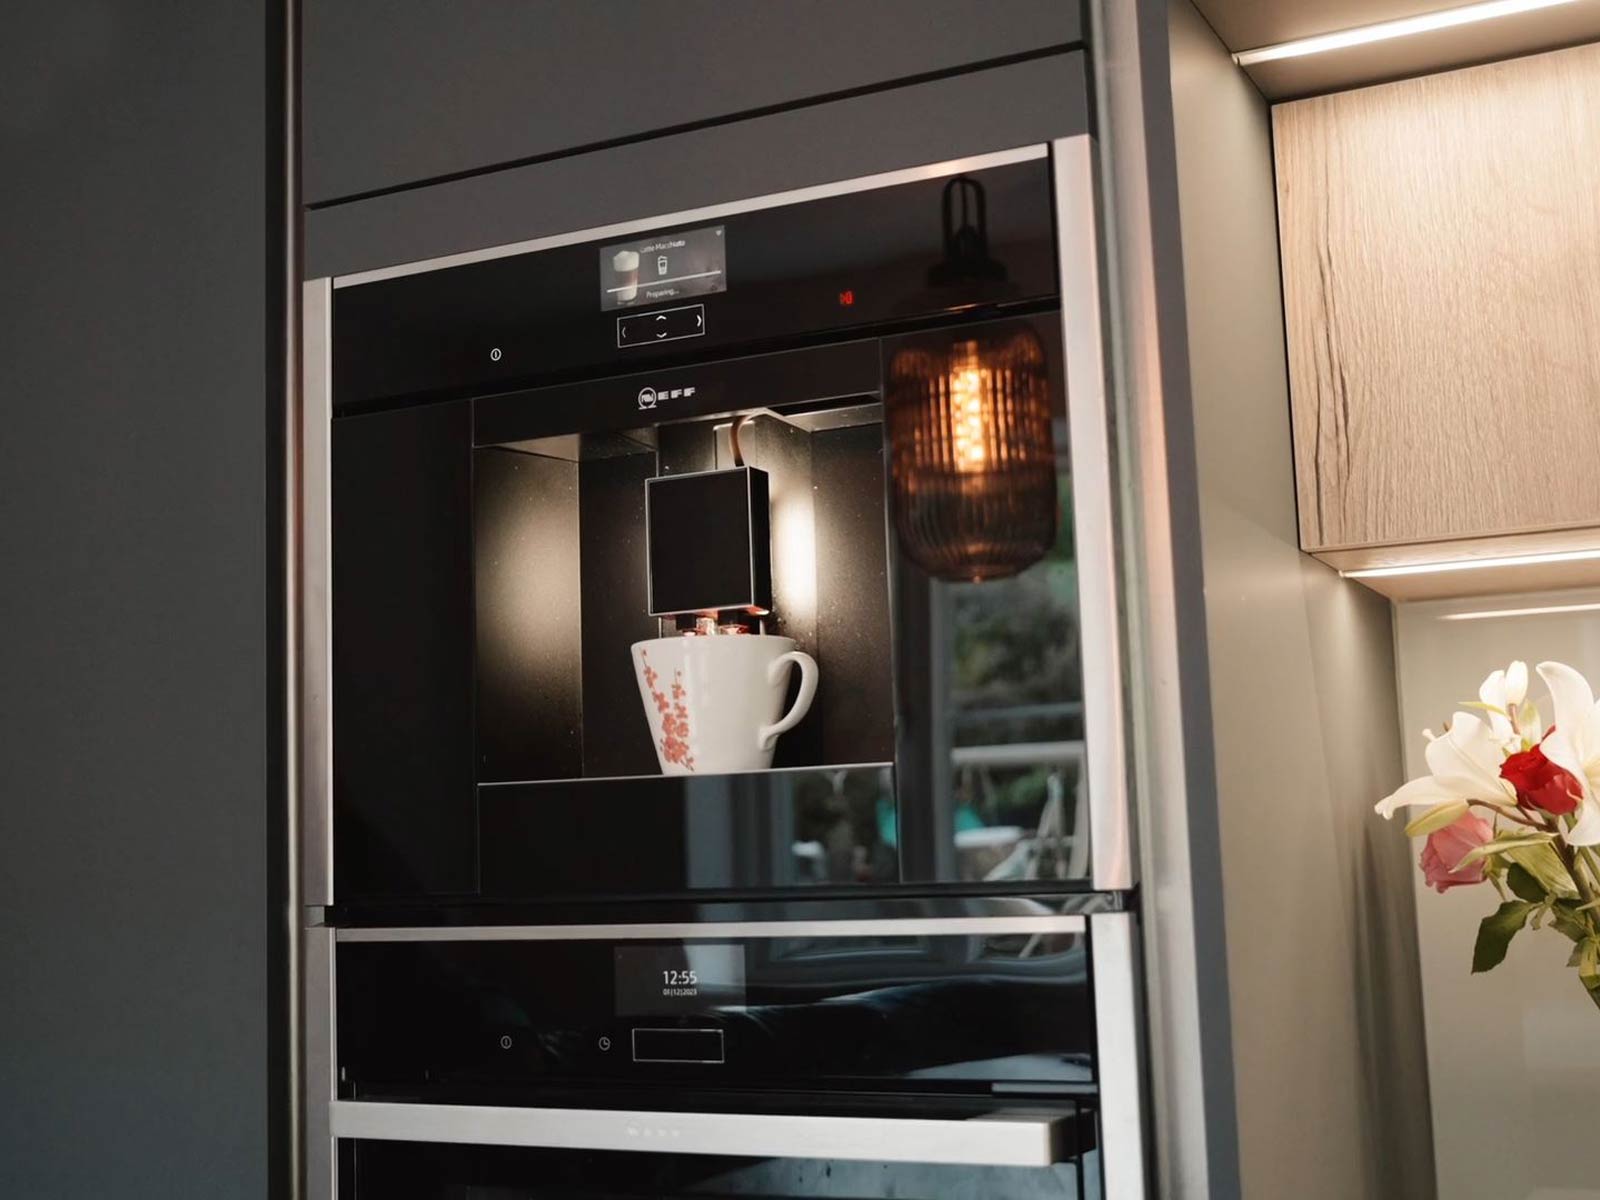 A Neff coffee machine built into a handless kitchen design